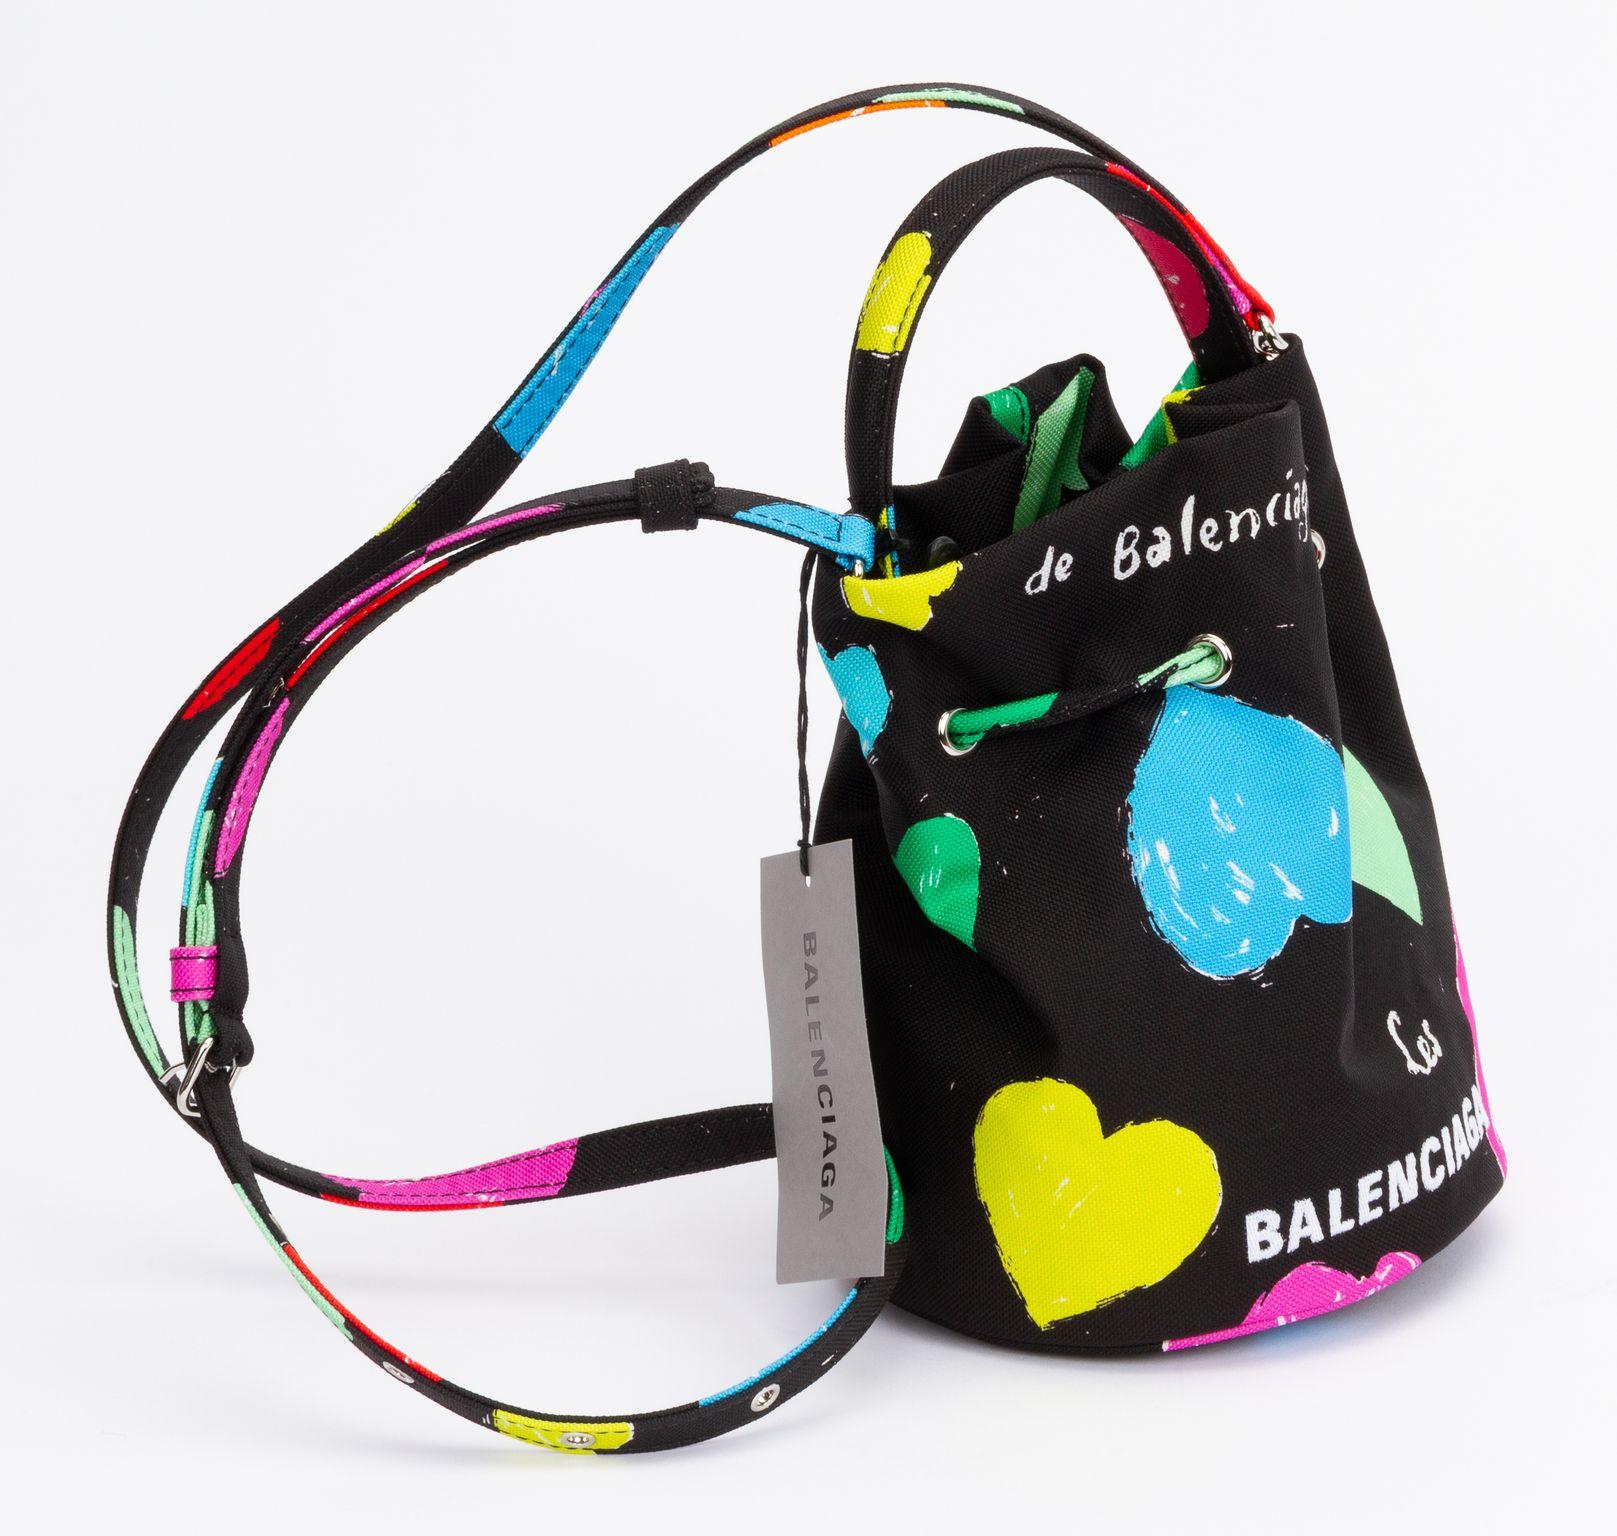 Balenciaga new small 2 way bucket bag. Handbag or cross body. Black toile with colorful hearts design. Adjustable and detachable shoulder strap (drop 15